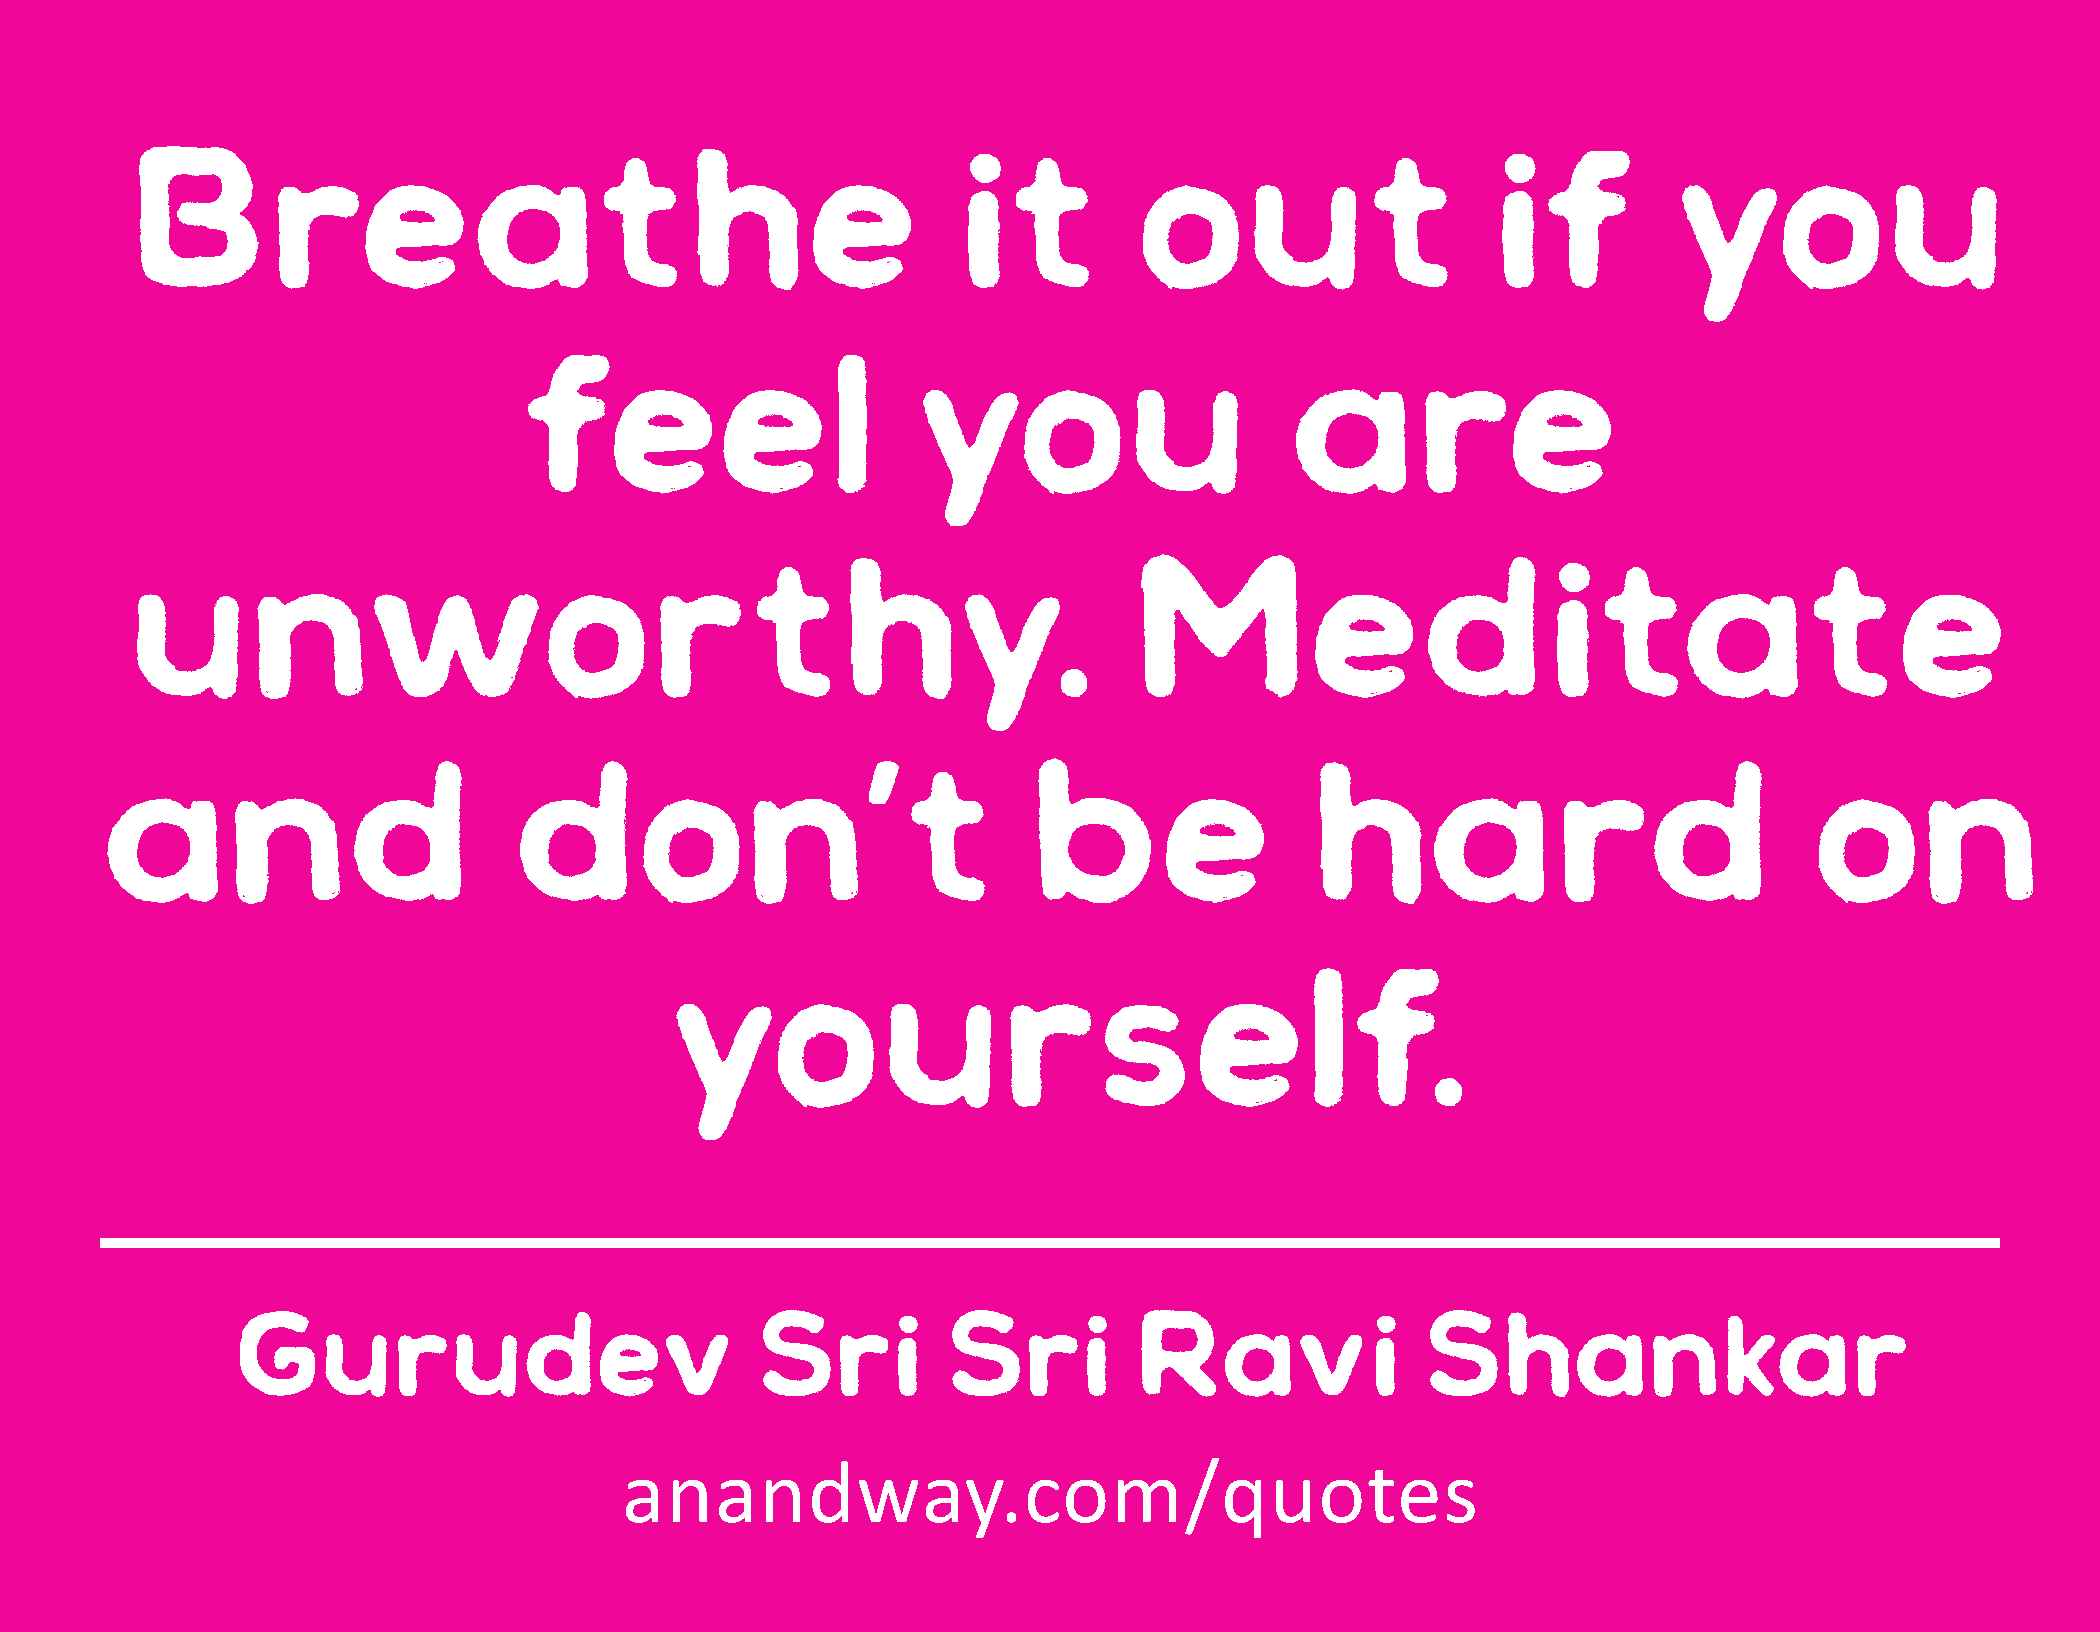 Breathe it out if you feel you are unworthy. Meditate and don’t be hard on yourself. 
 -Gurudev Sri Sri Ravi Shankar